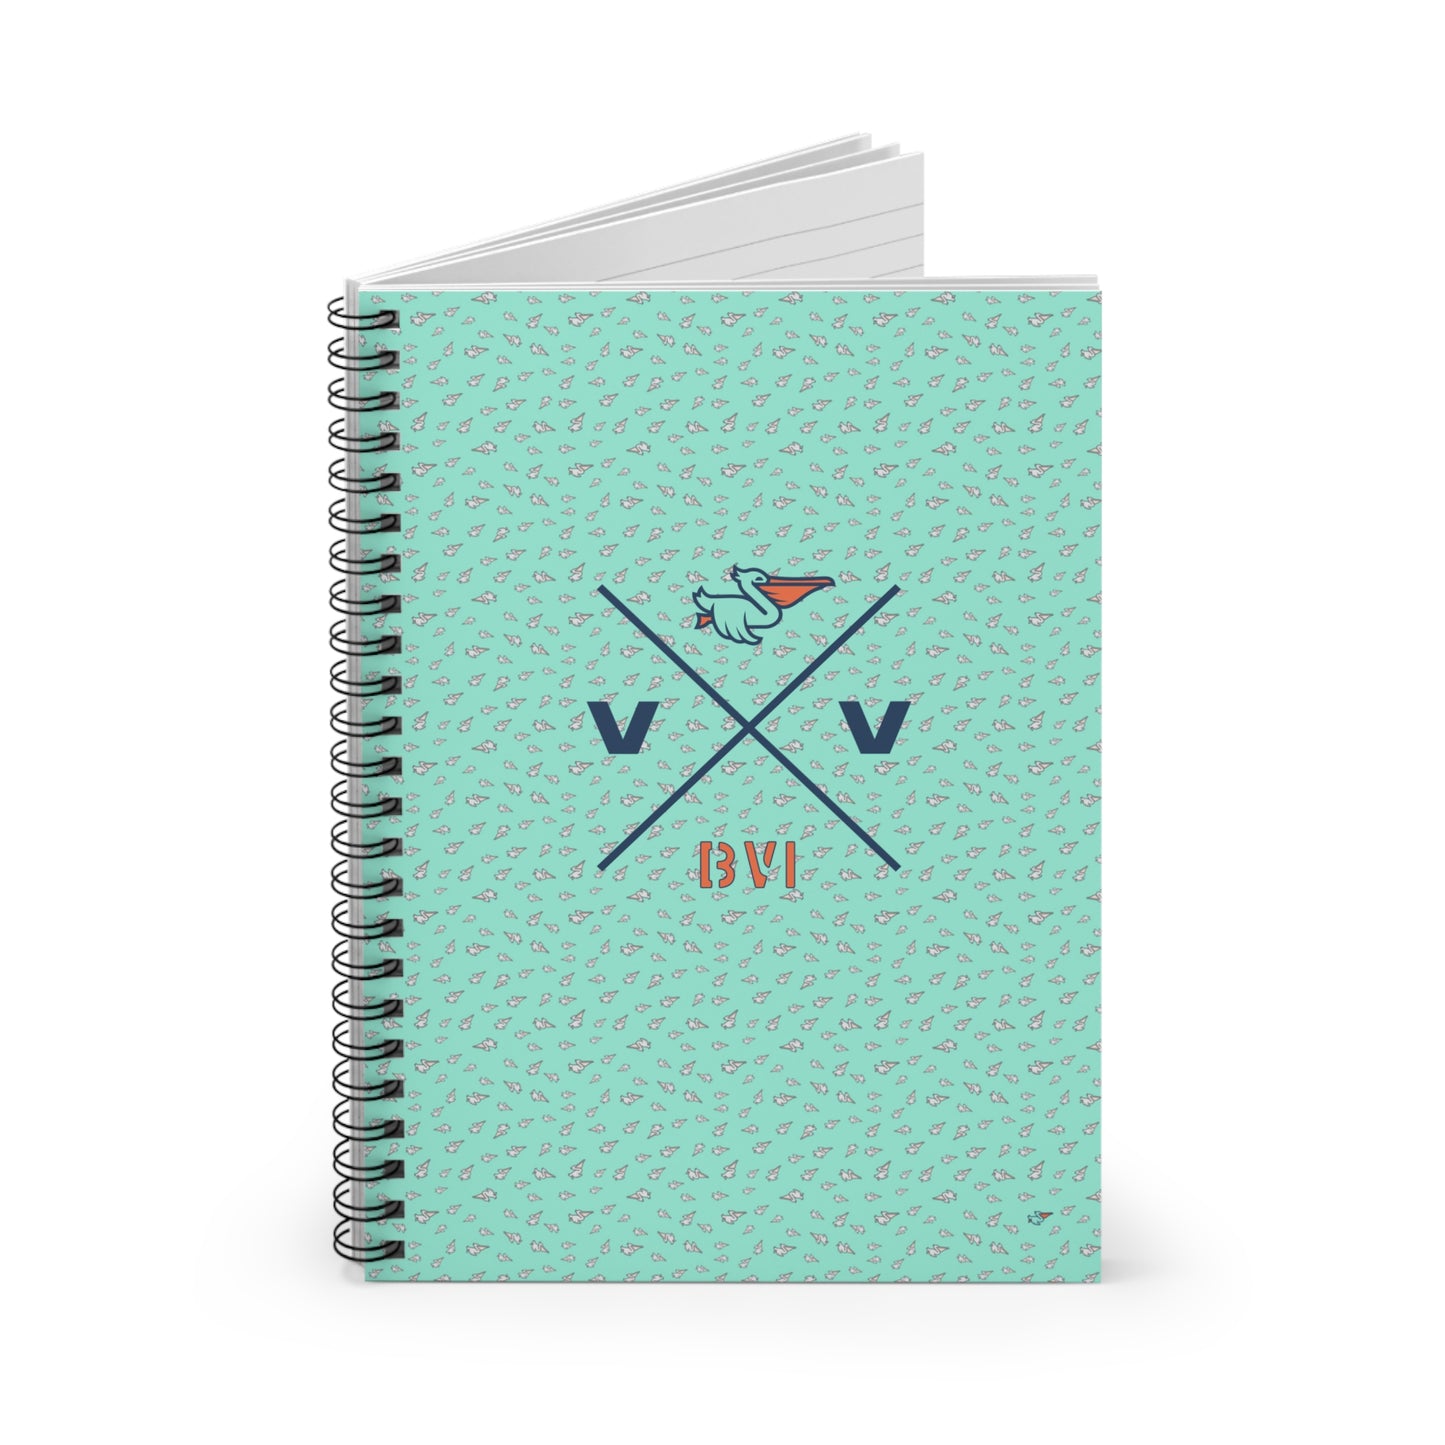 "Virgin Vibes | BVI" Spiral Notebook - Ruled Line